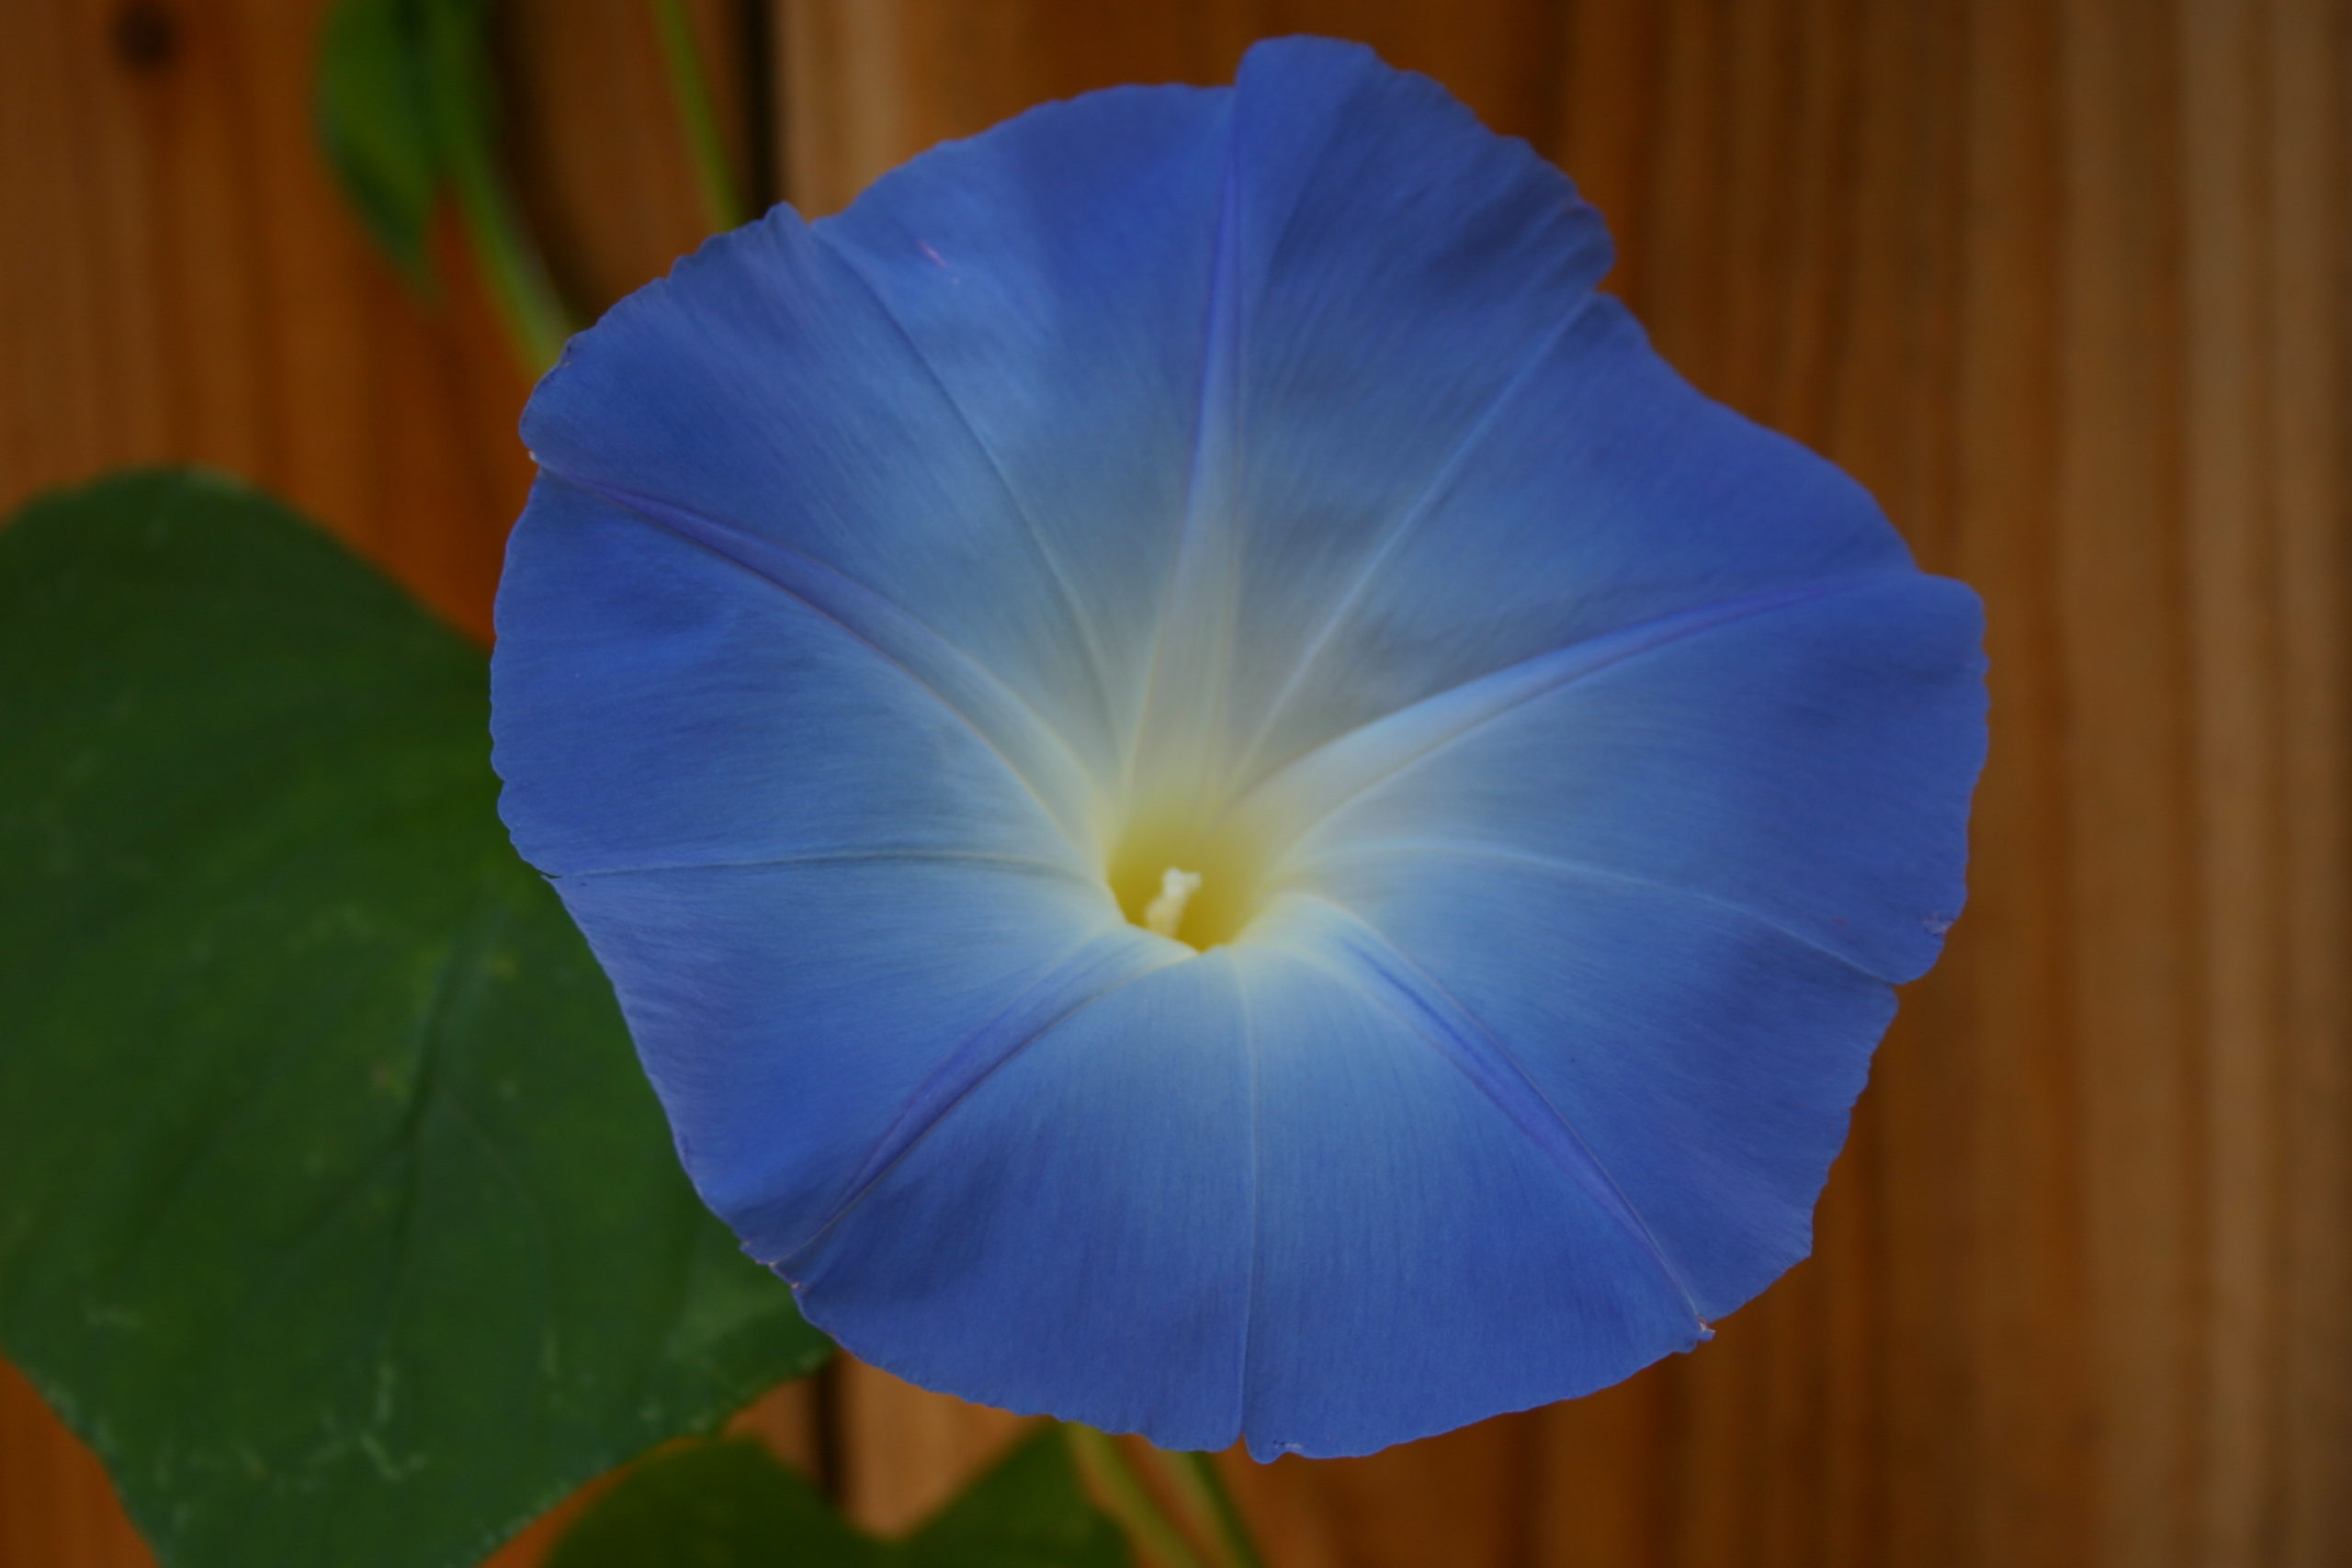 Ipomoea violacea "Heavenly Blue" Morning Glory Seeds 